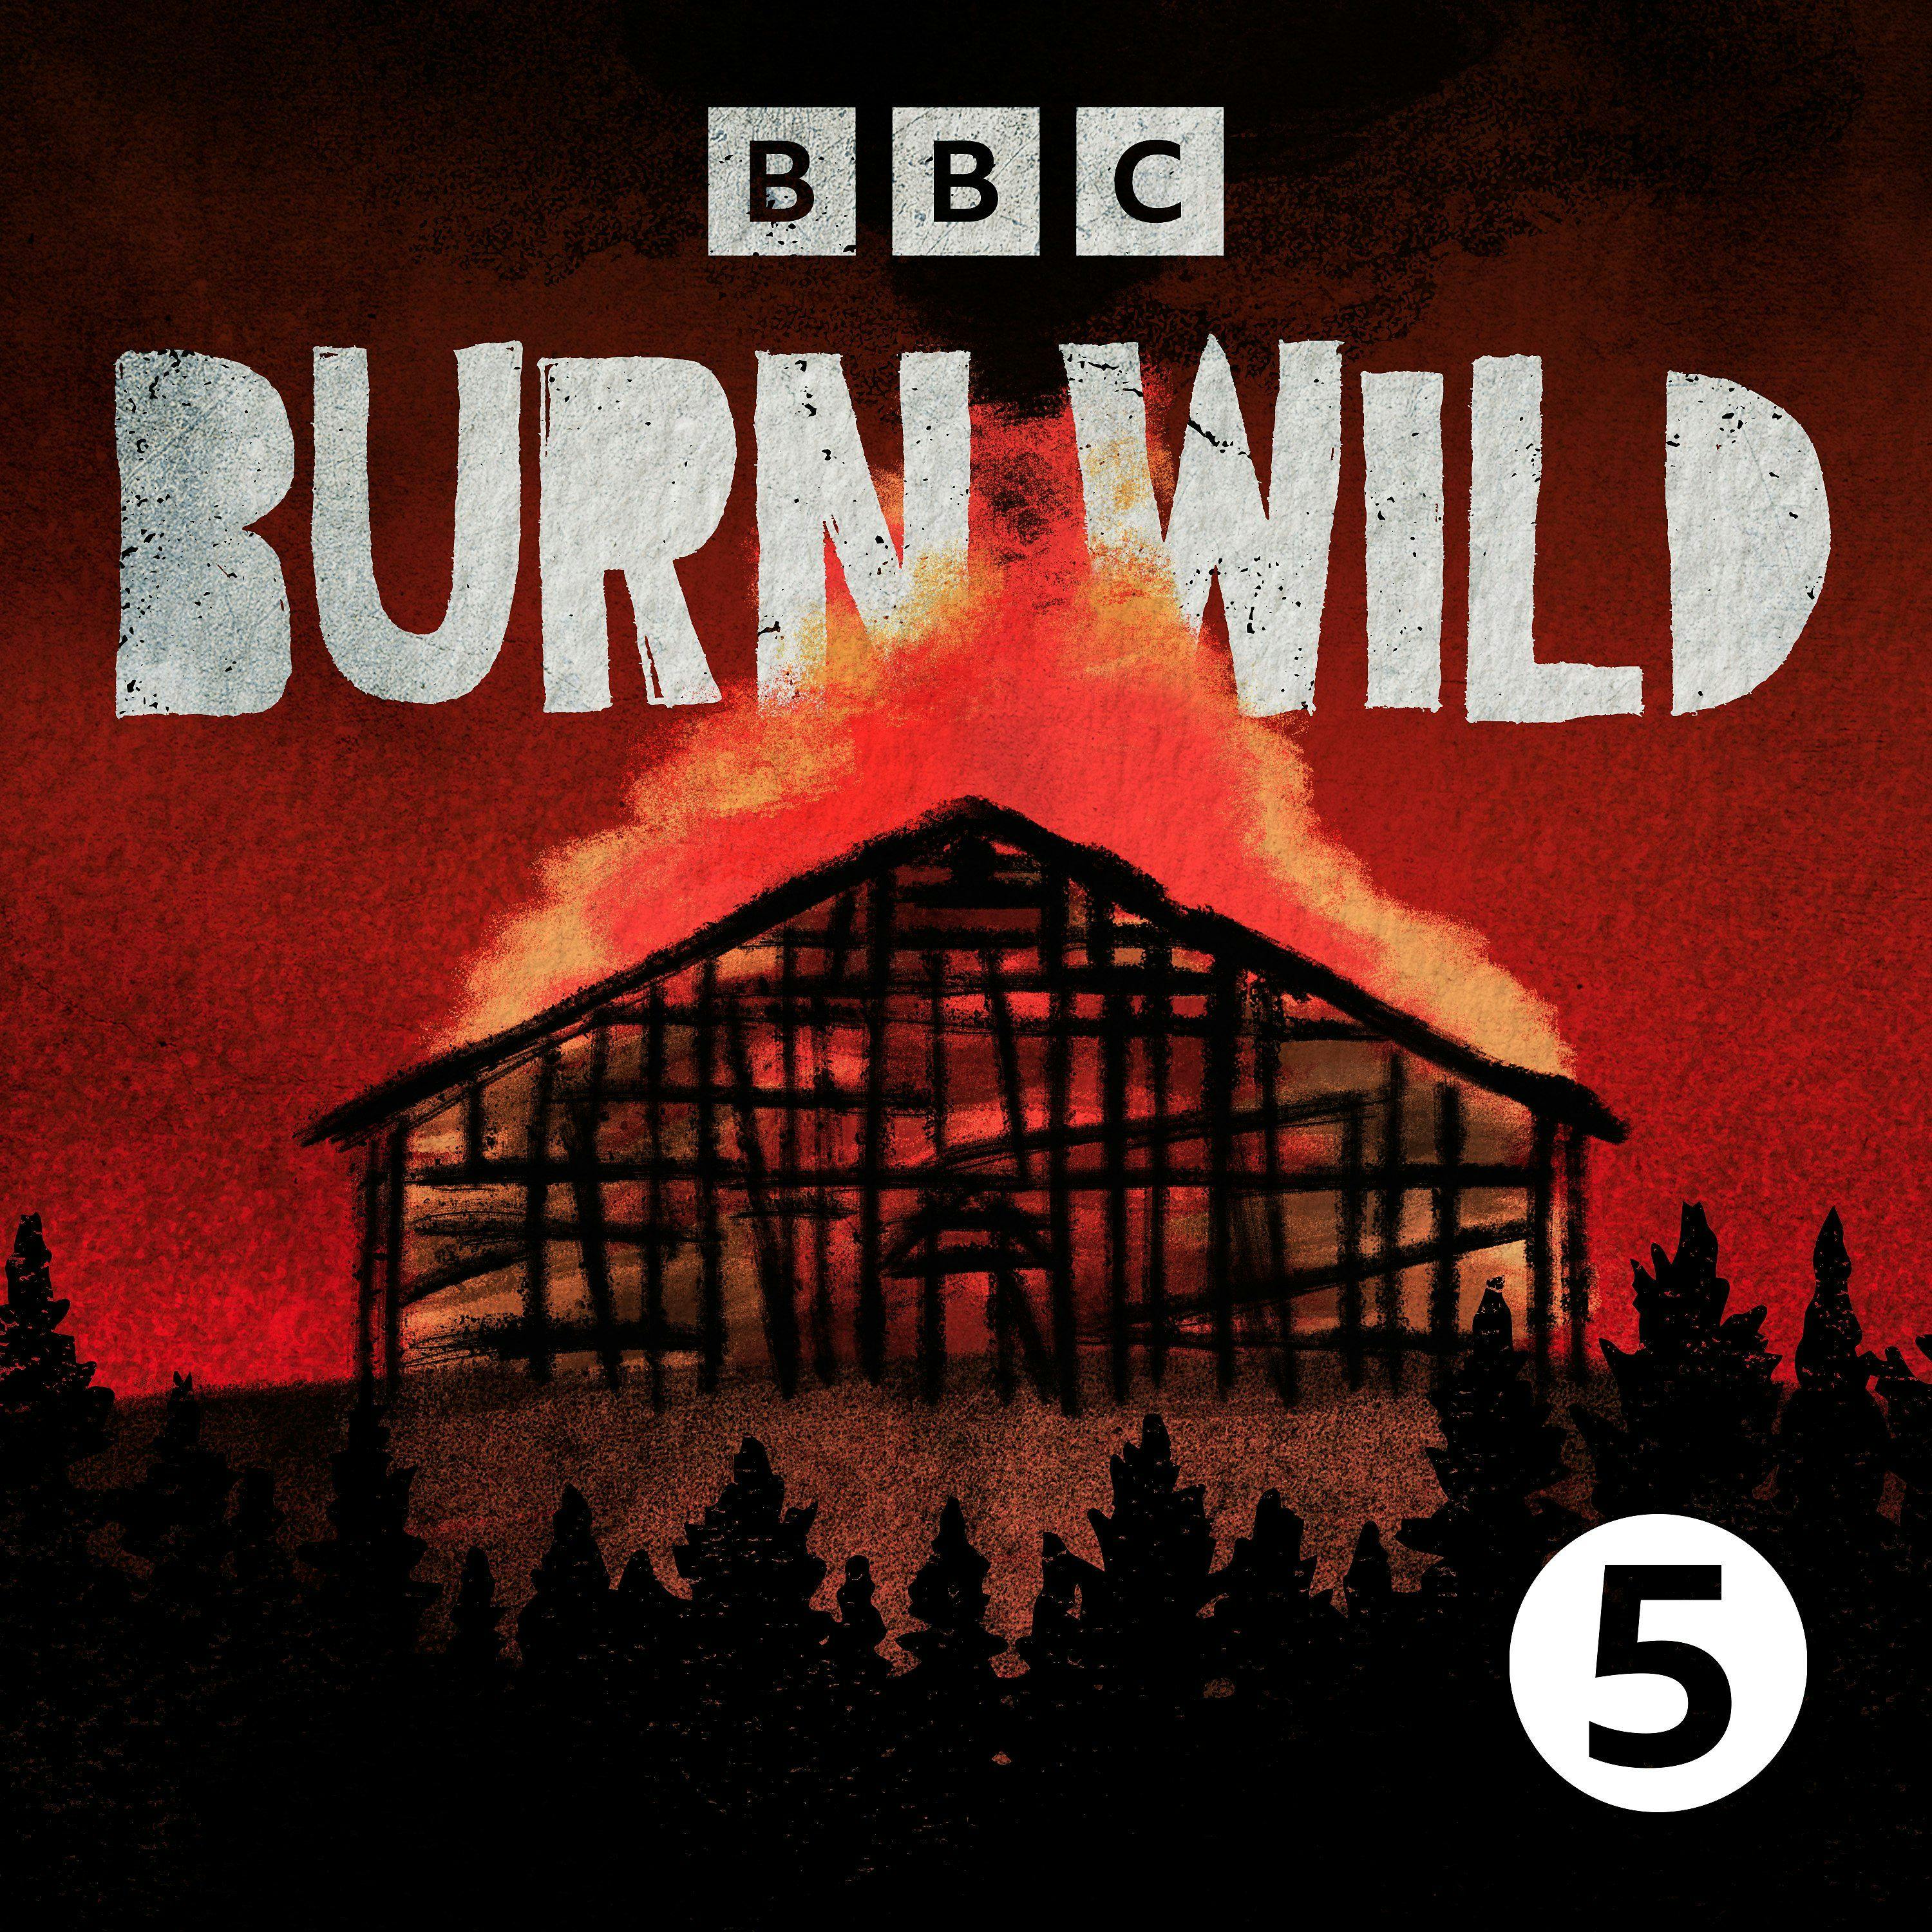 Burn Wild